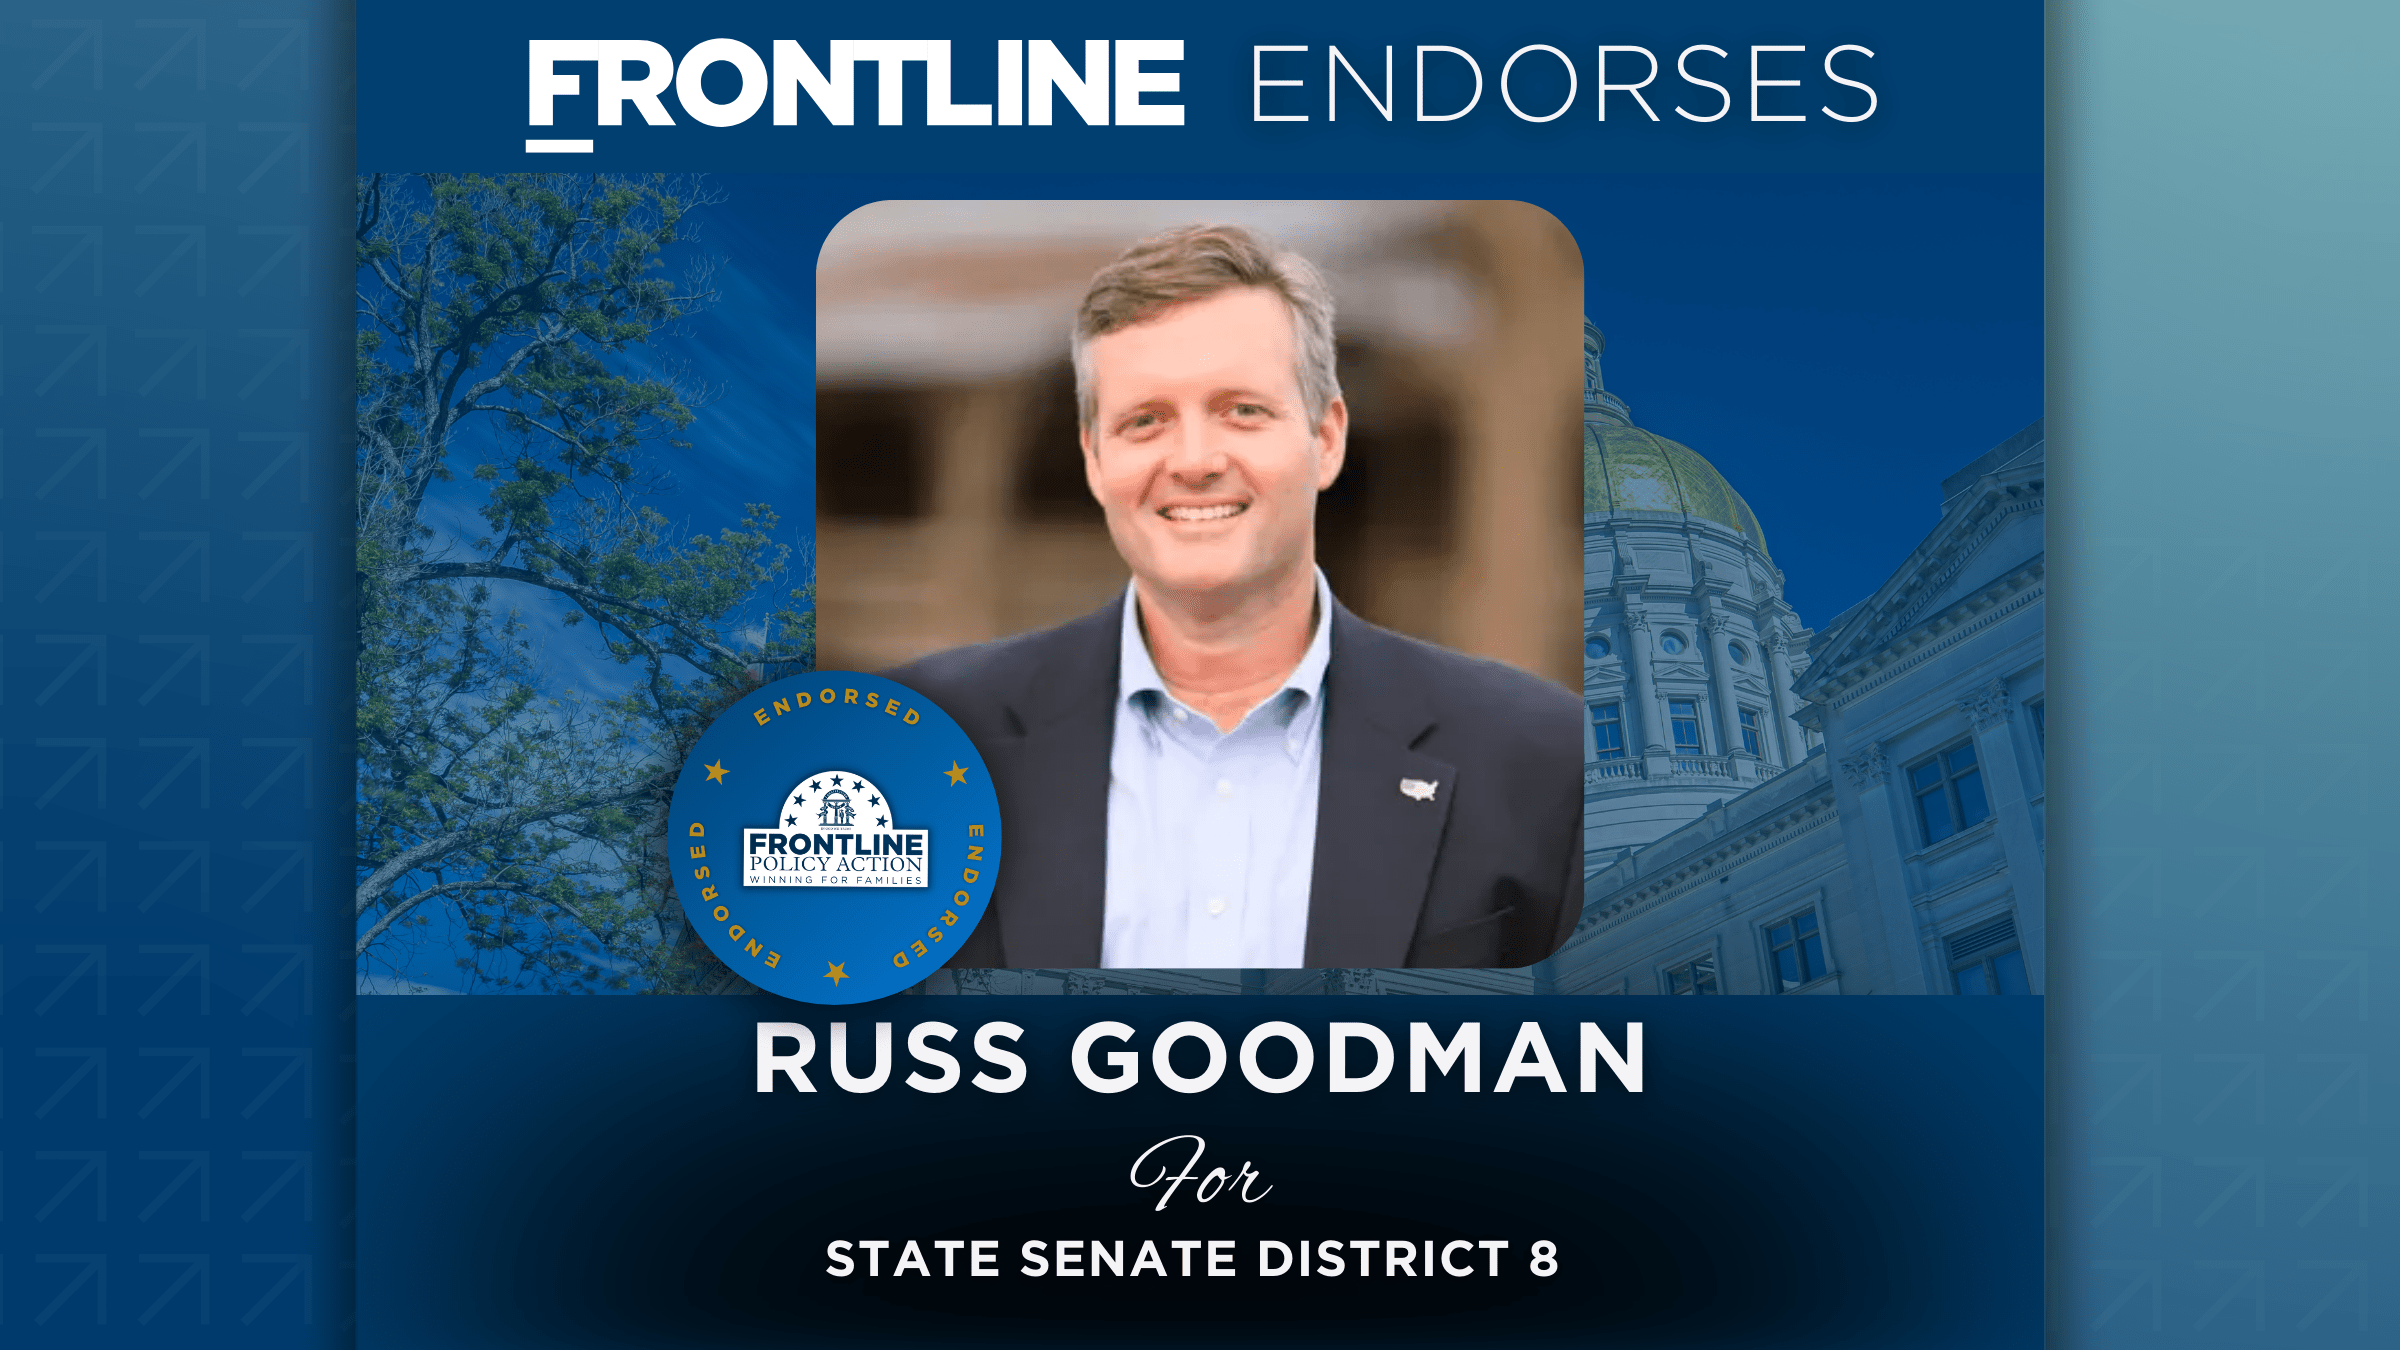 BREAKING: Frontline Endorses Russ Goodman for State Senate District 8